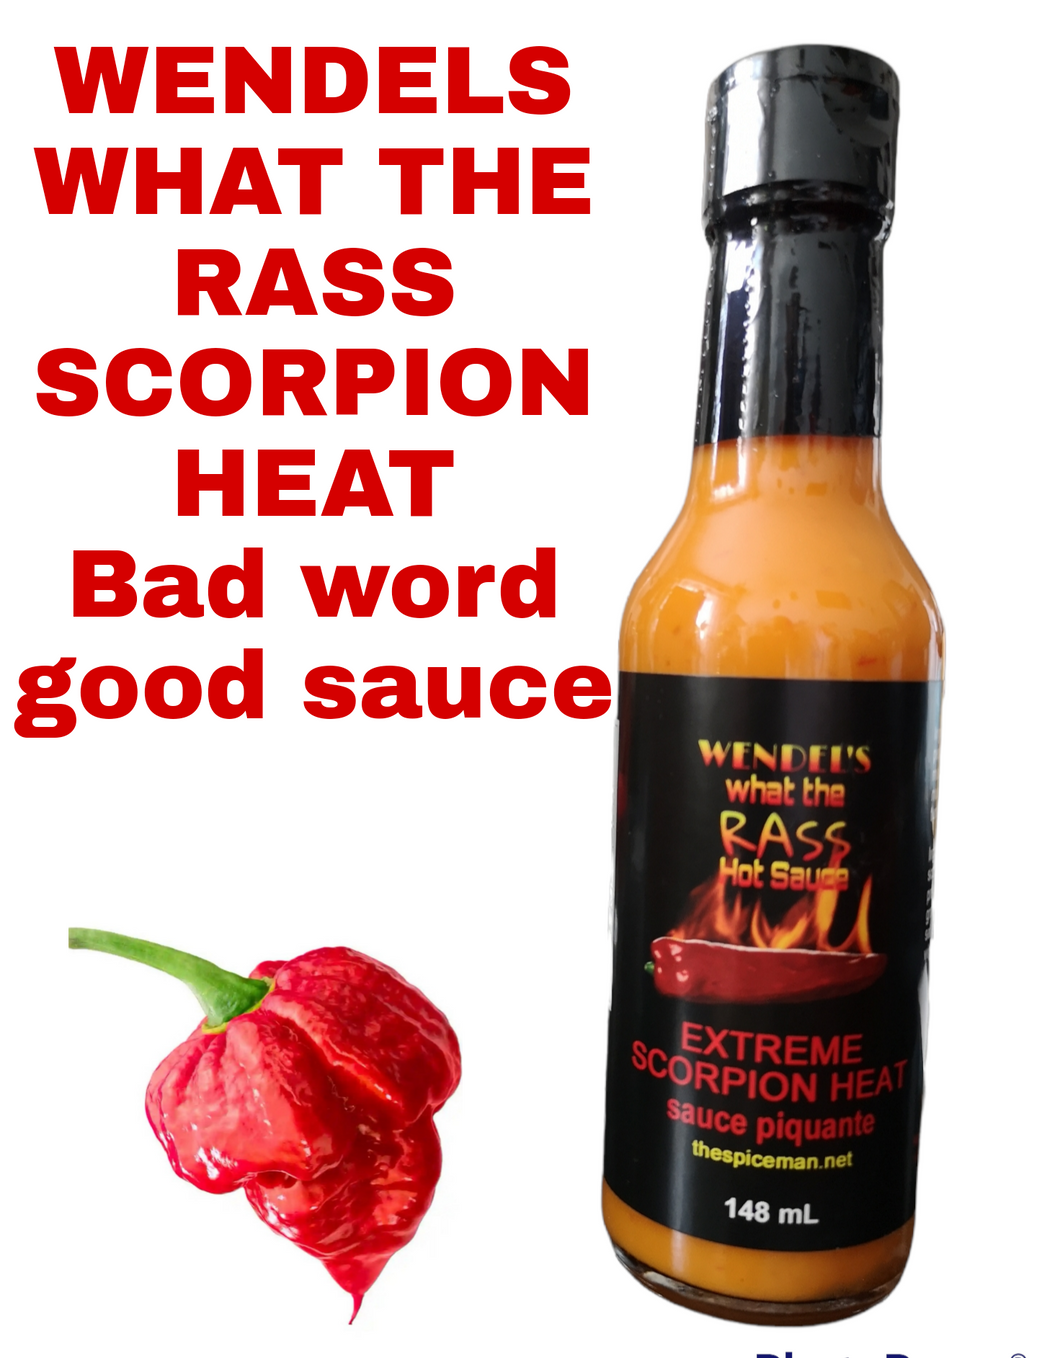 Wendels scorpion heat hot sauce - The Spiceman